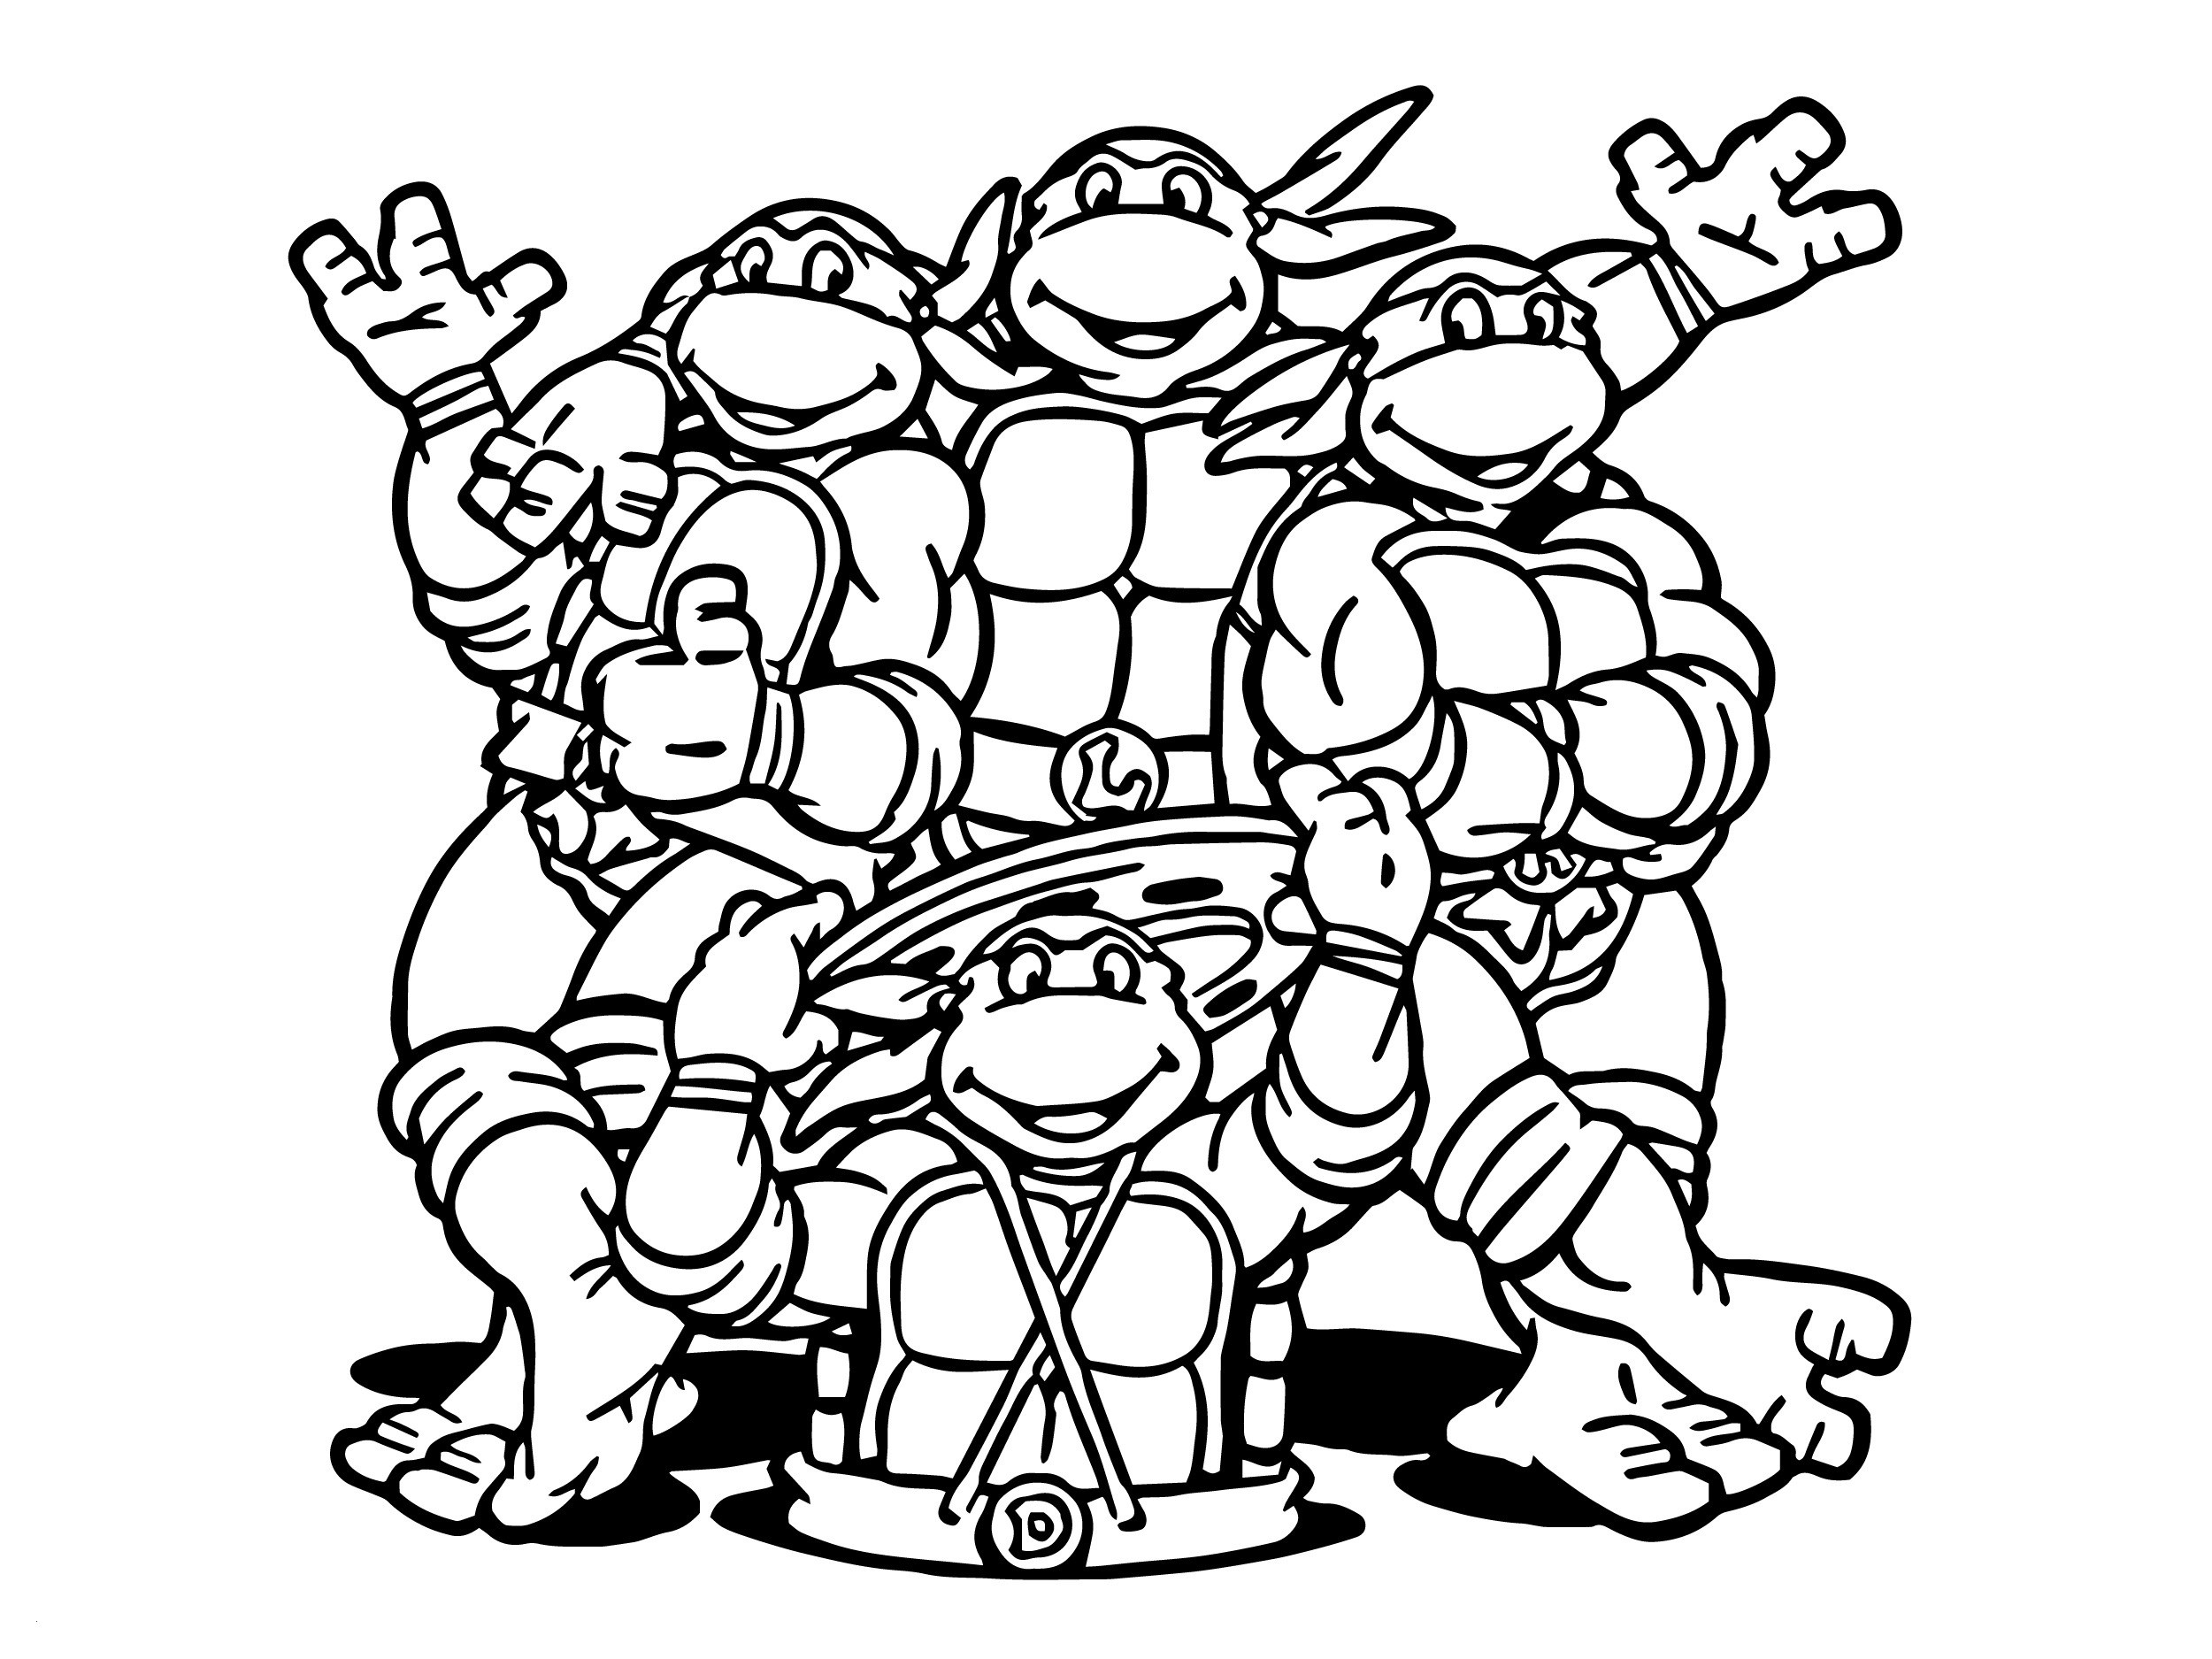 Boys Kids Coloring Pages Ninja Turtles
 Teenage Mutant Ninja Turtles Coloring Pages Best